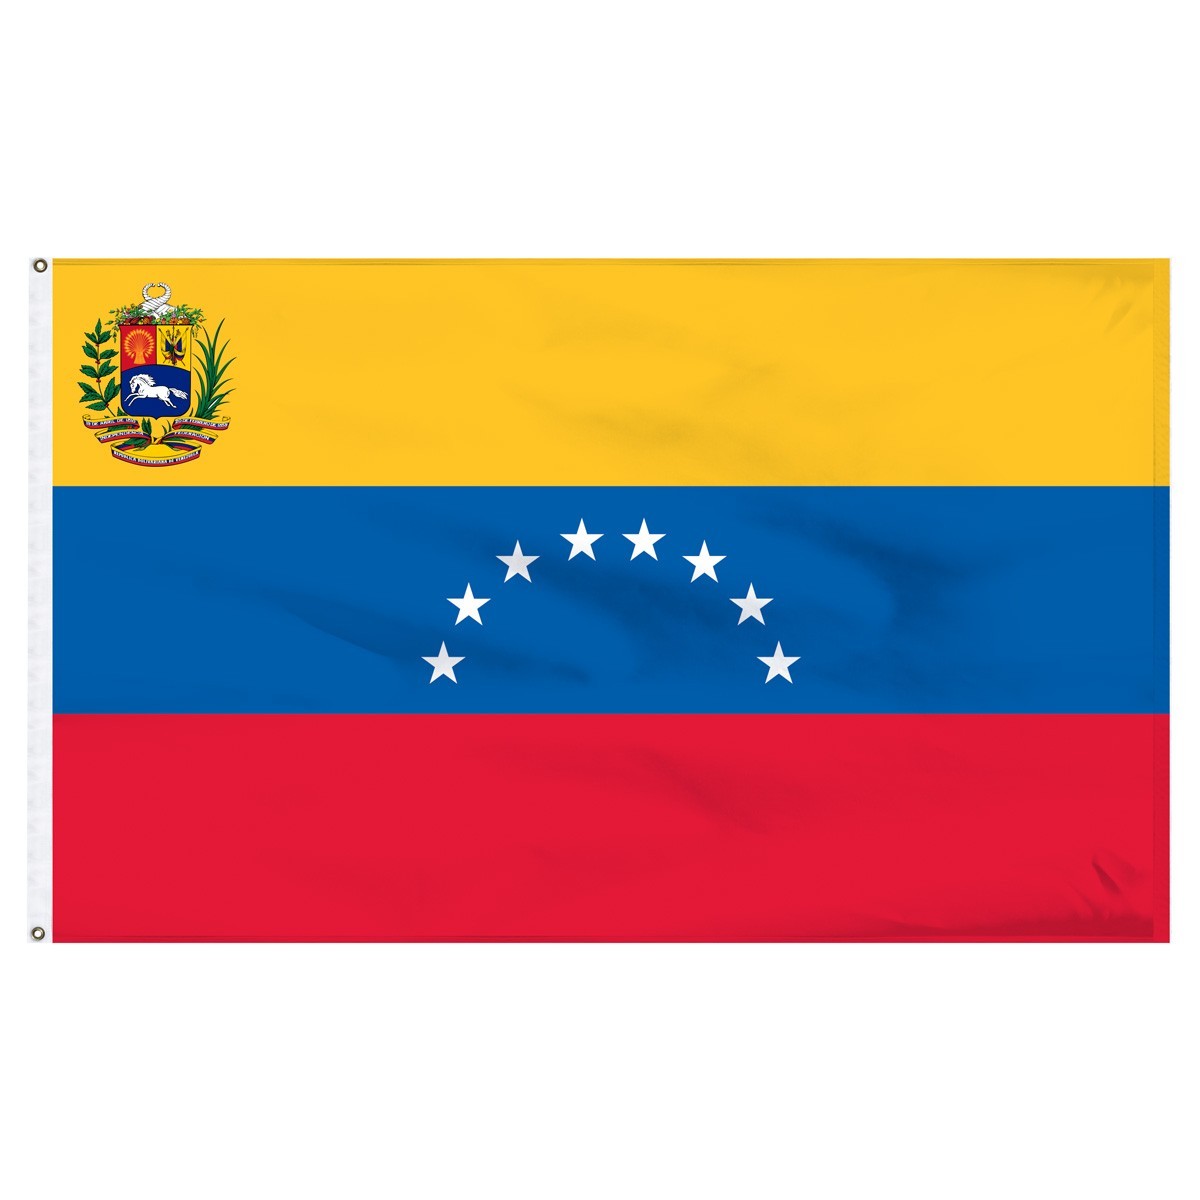 Venezuela 3ft x 5ft Outdoor Nylon Flag